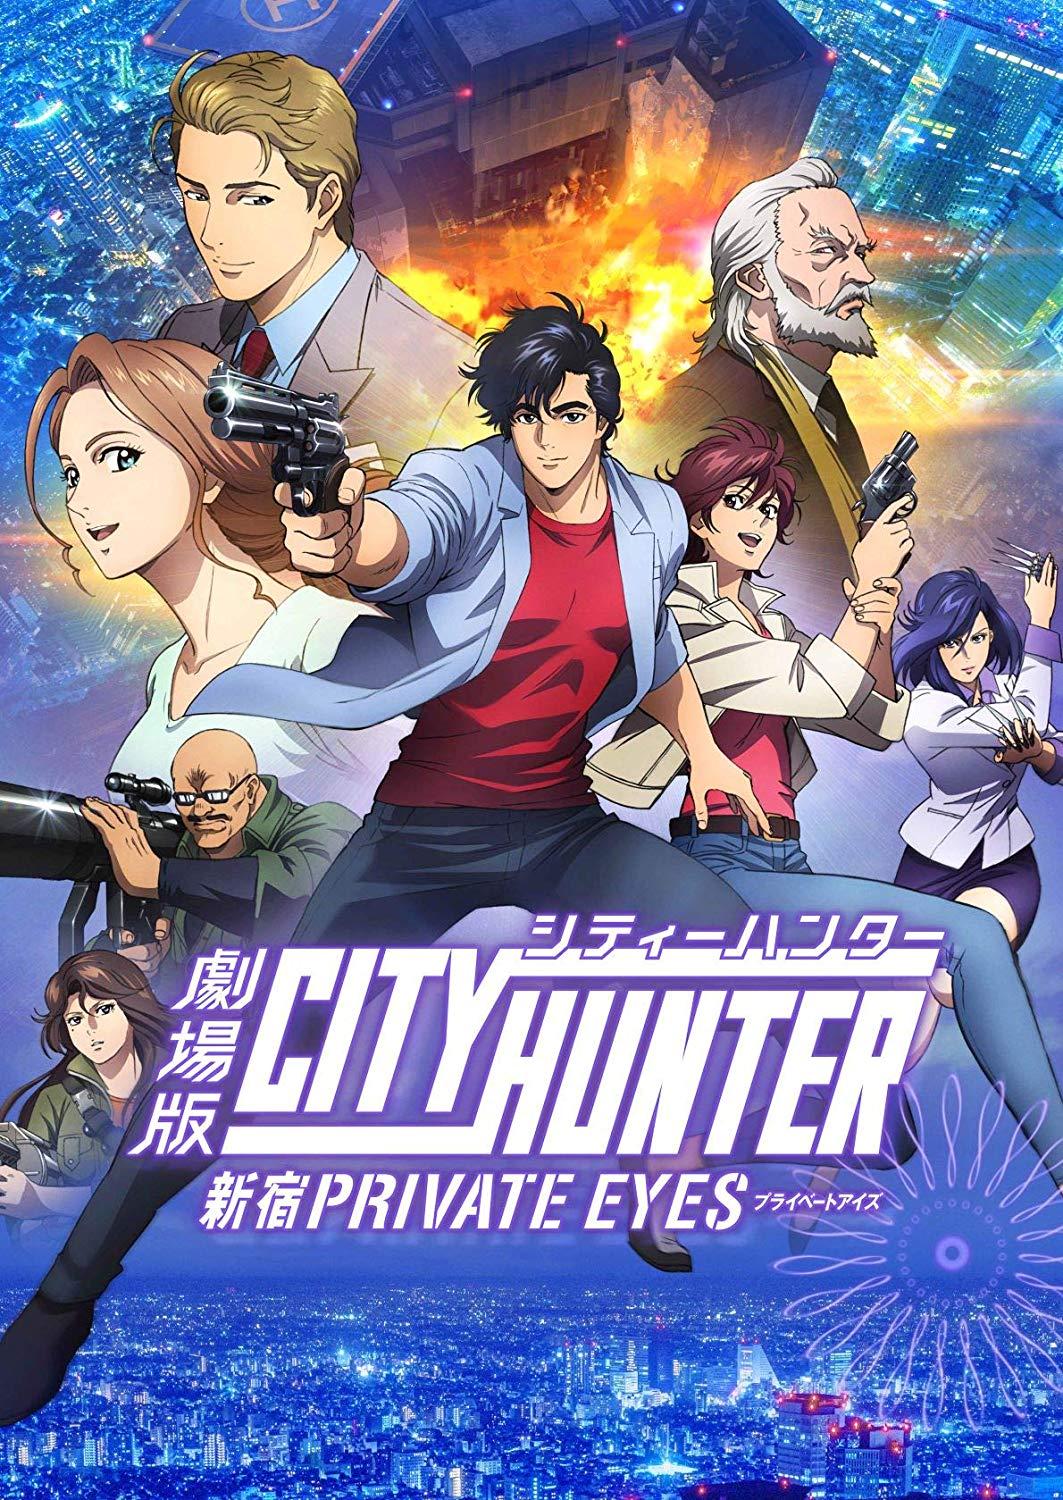 Movie City Hunter <Shinjuku Private Eyes> Normal